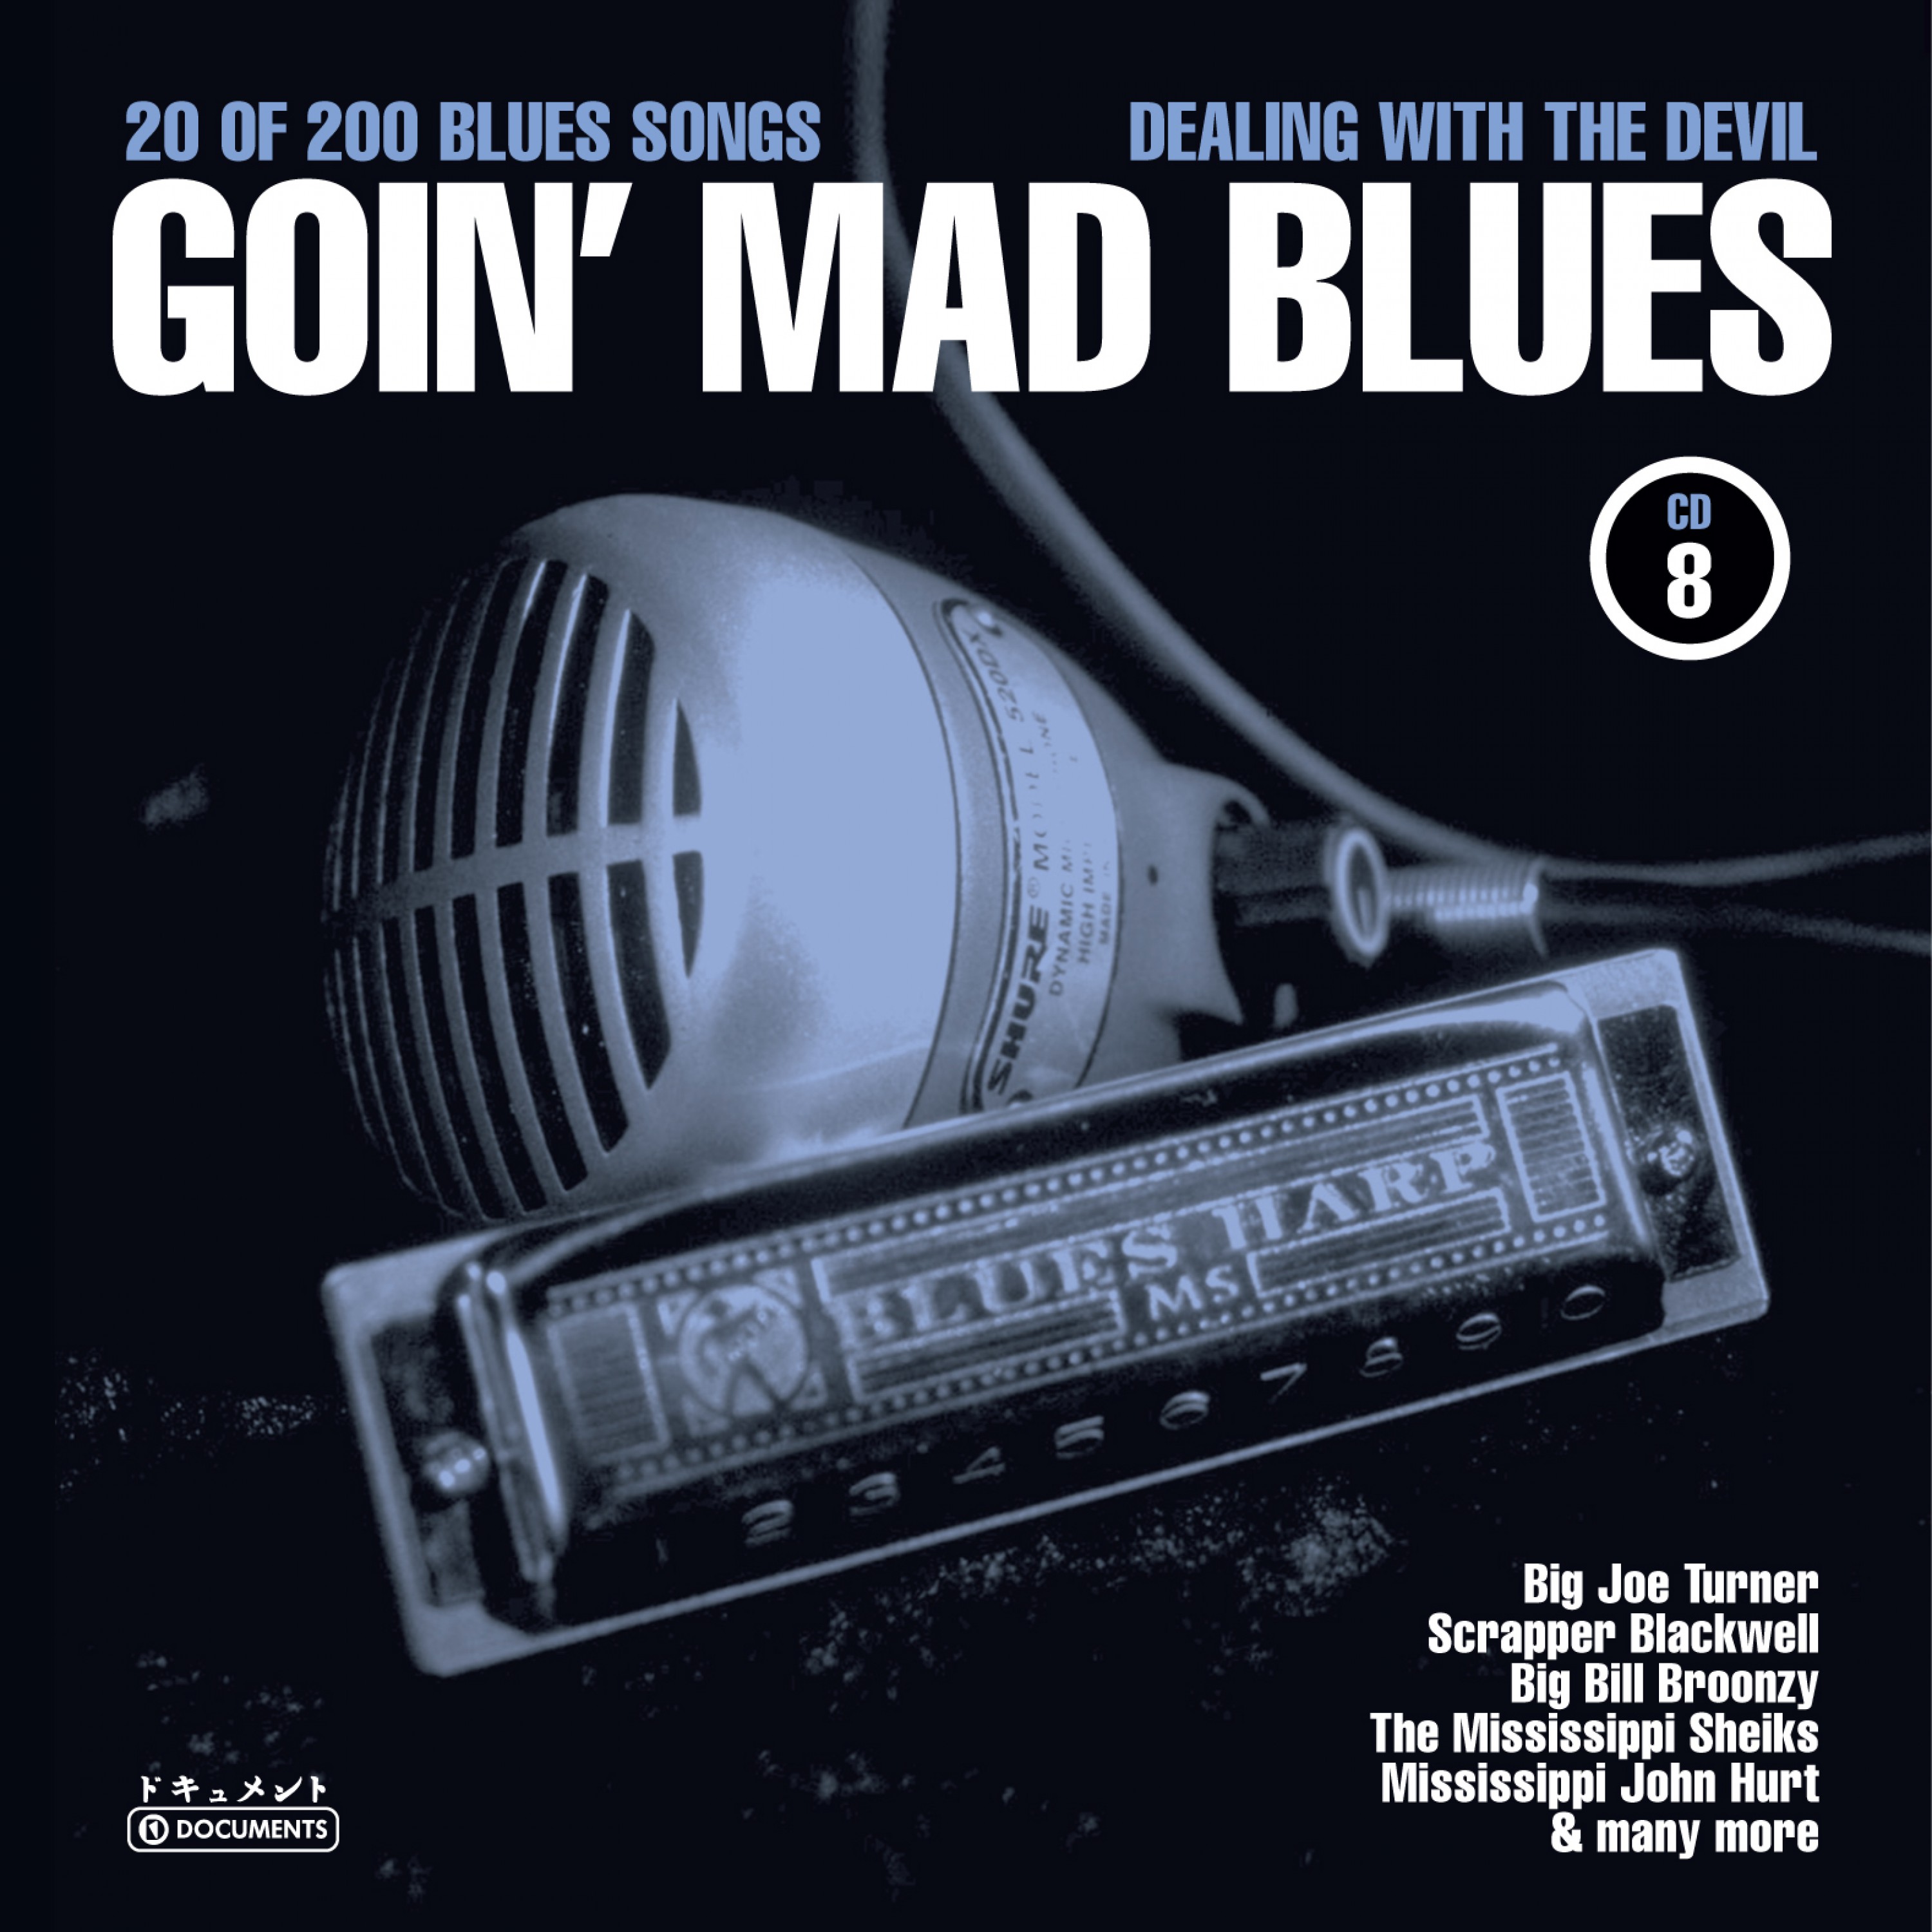 Goin' Mad Blues Vol. 8